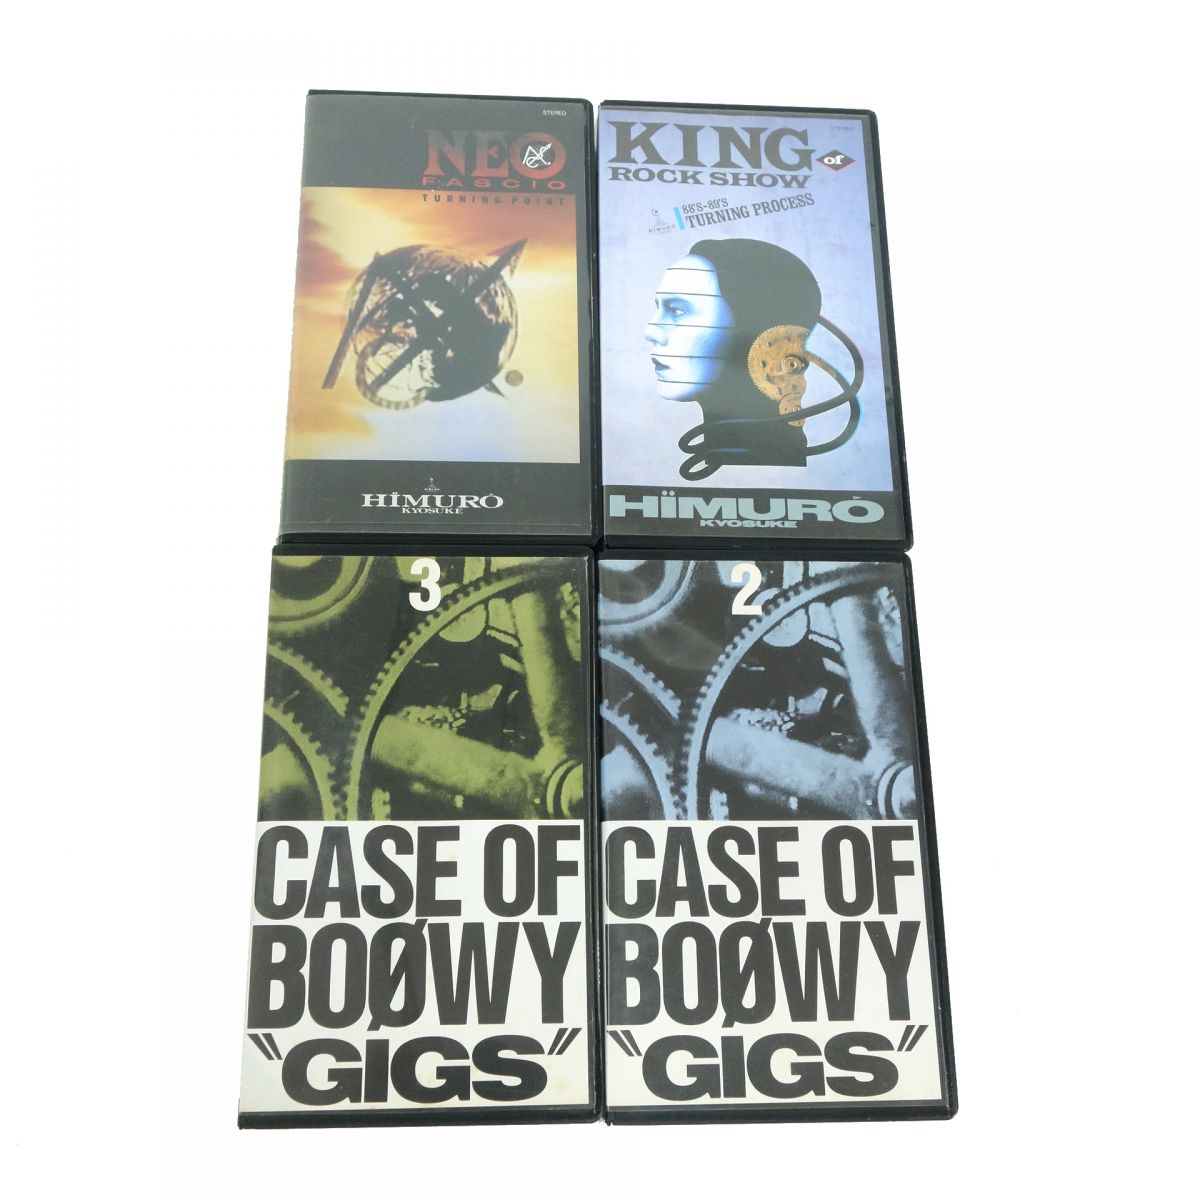 VHS ビデオテープ BOOWY GIGS CASE OF BOOWY 2・3＆氷室京介 KING OF ROCK SHOW・NEO FASCIO TURNING P..